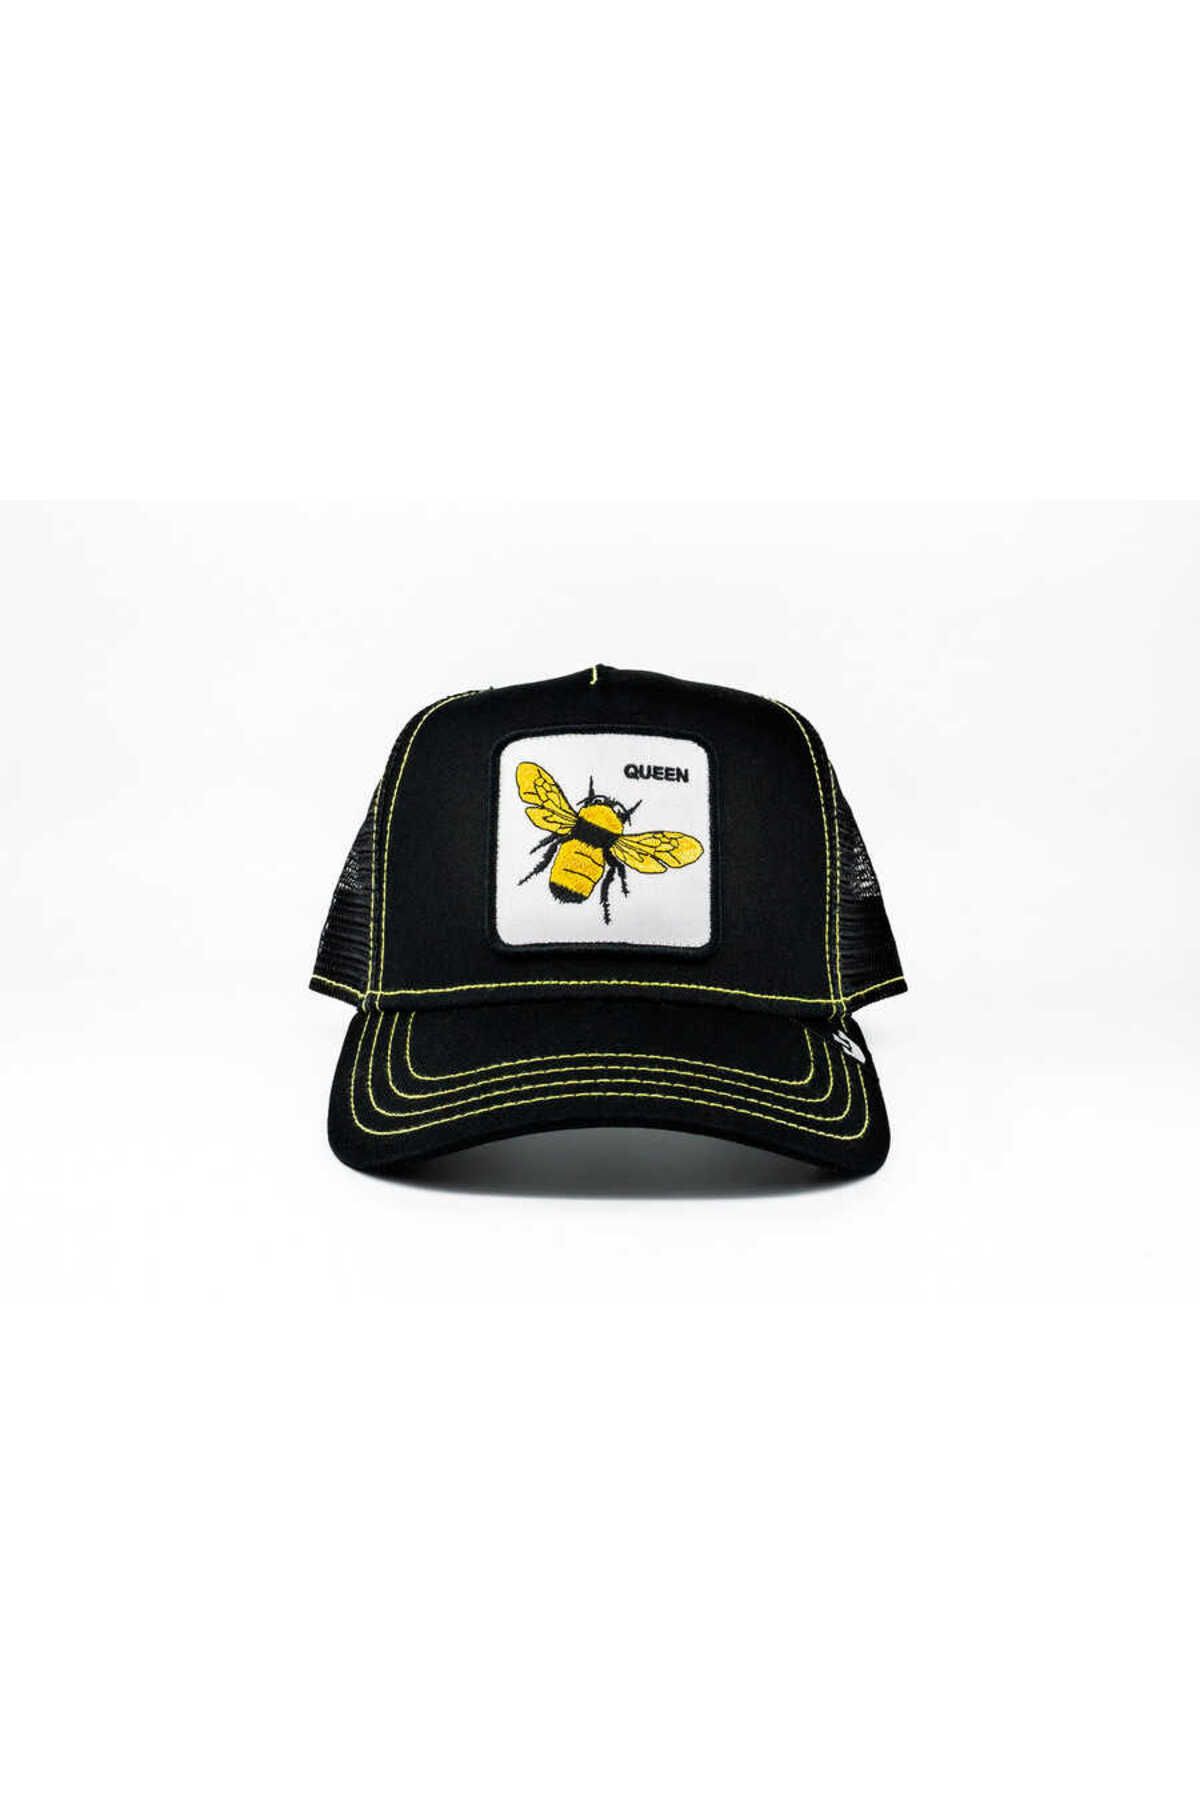 Goorin Bros Queen Bee (ARI FİGÜRLÜ) 101-0245 Şapka